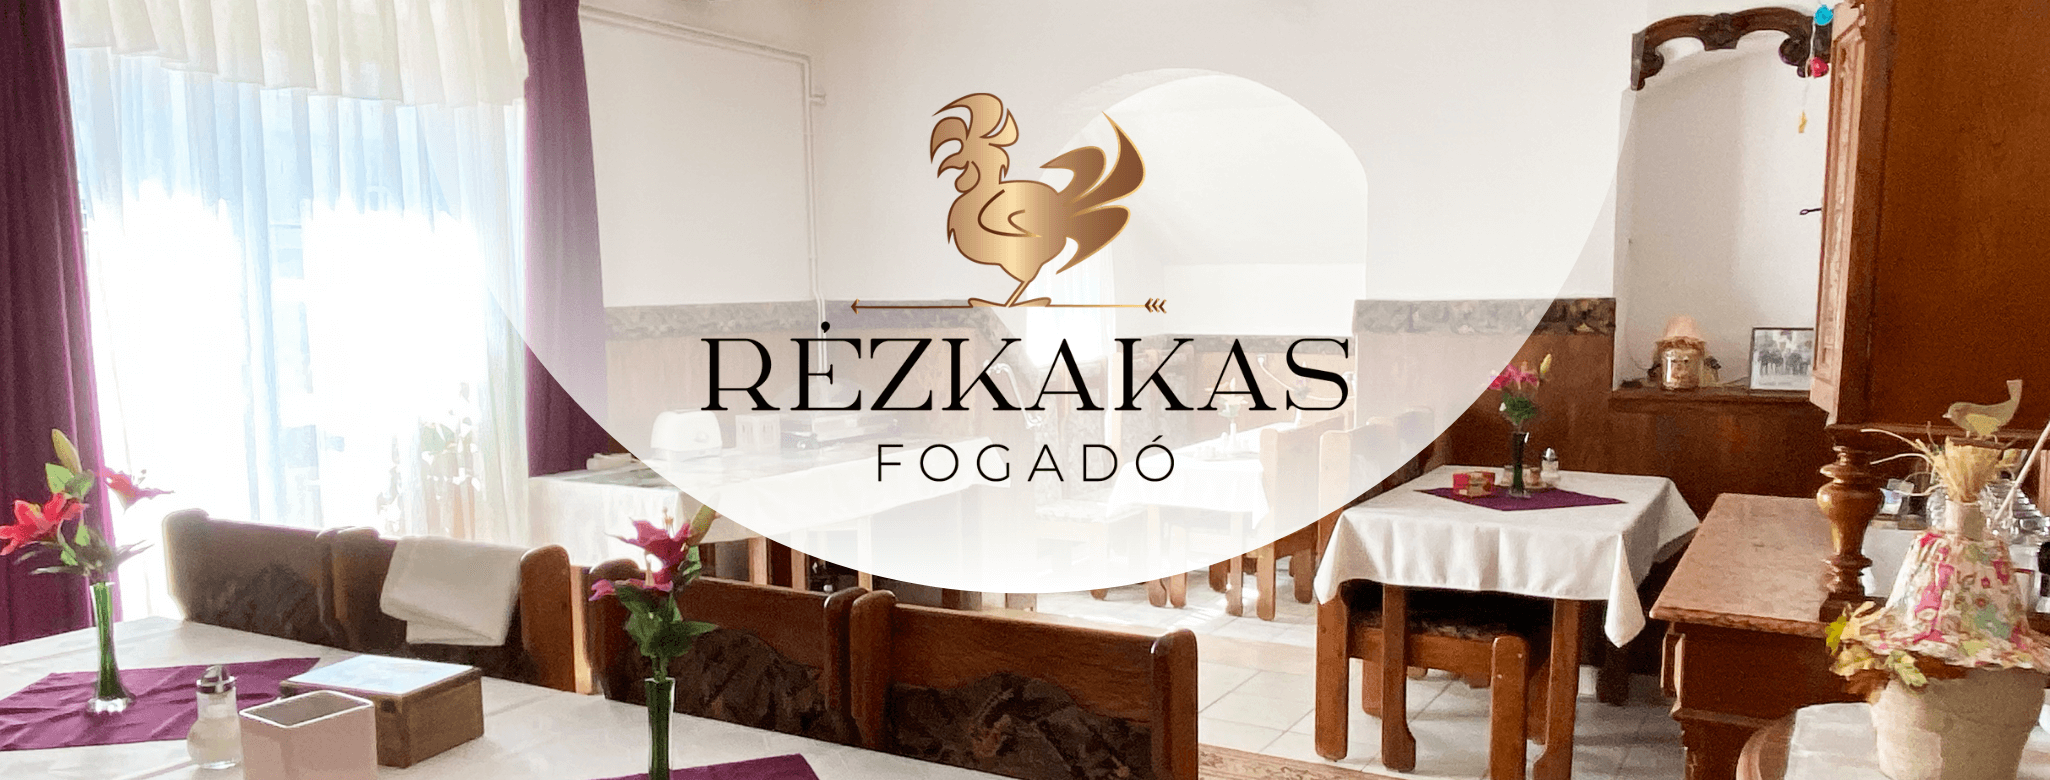 Rezkakas_Fogado_1.jpg